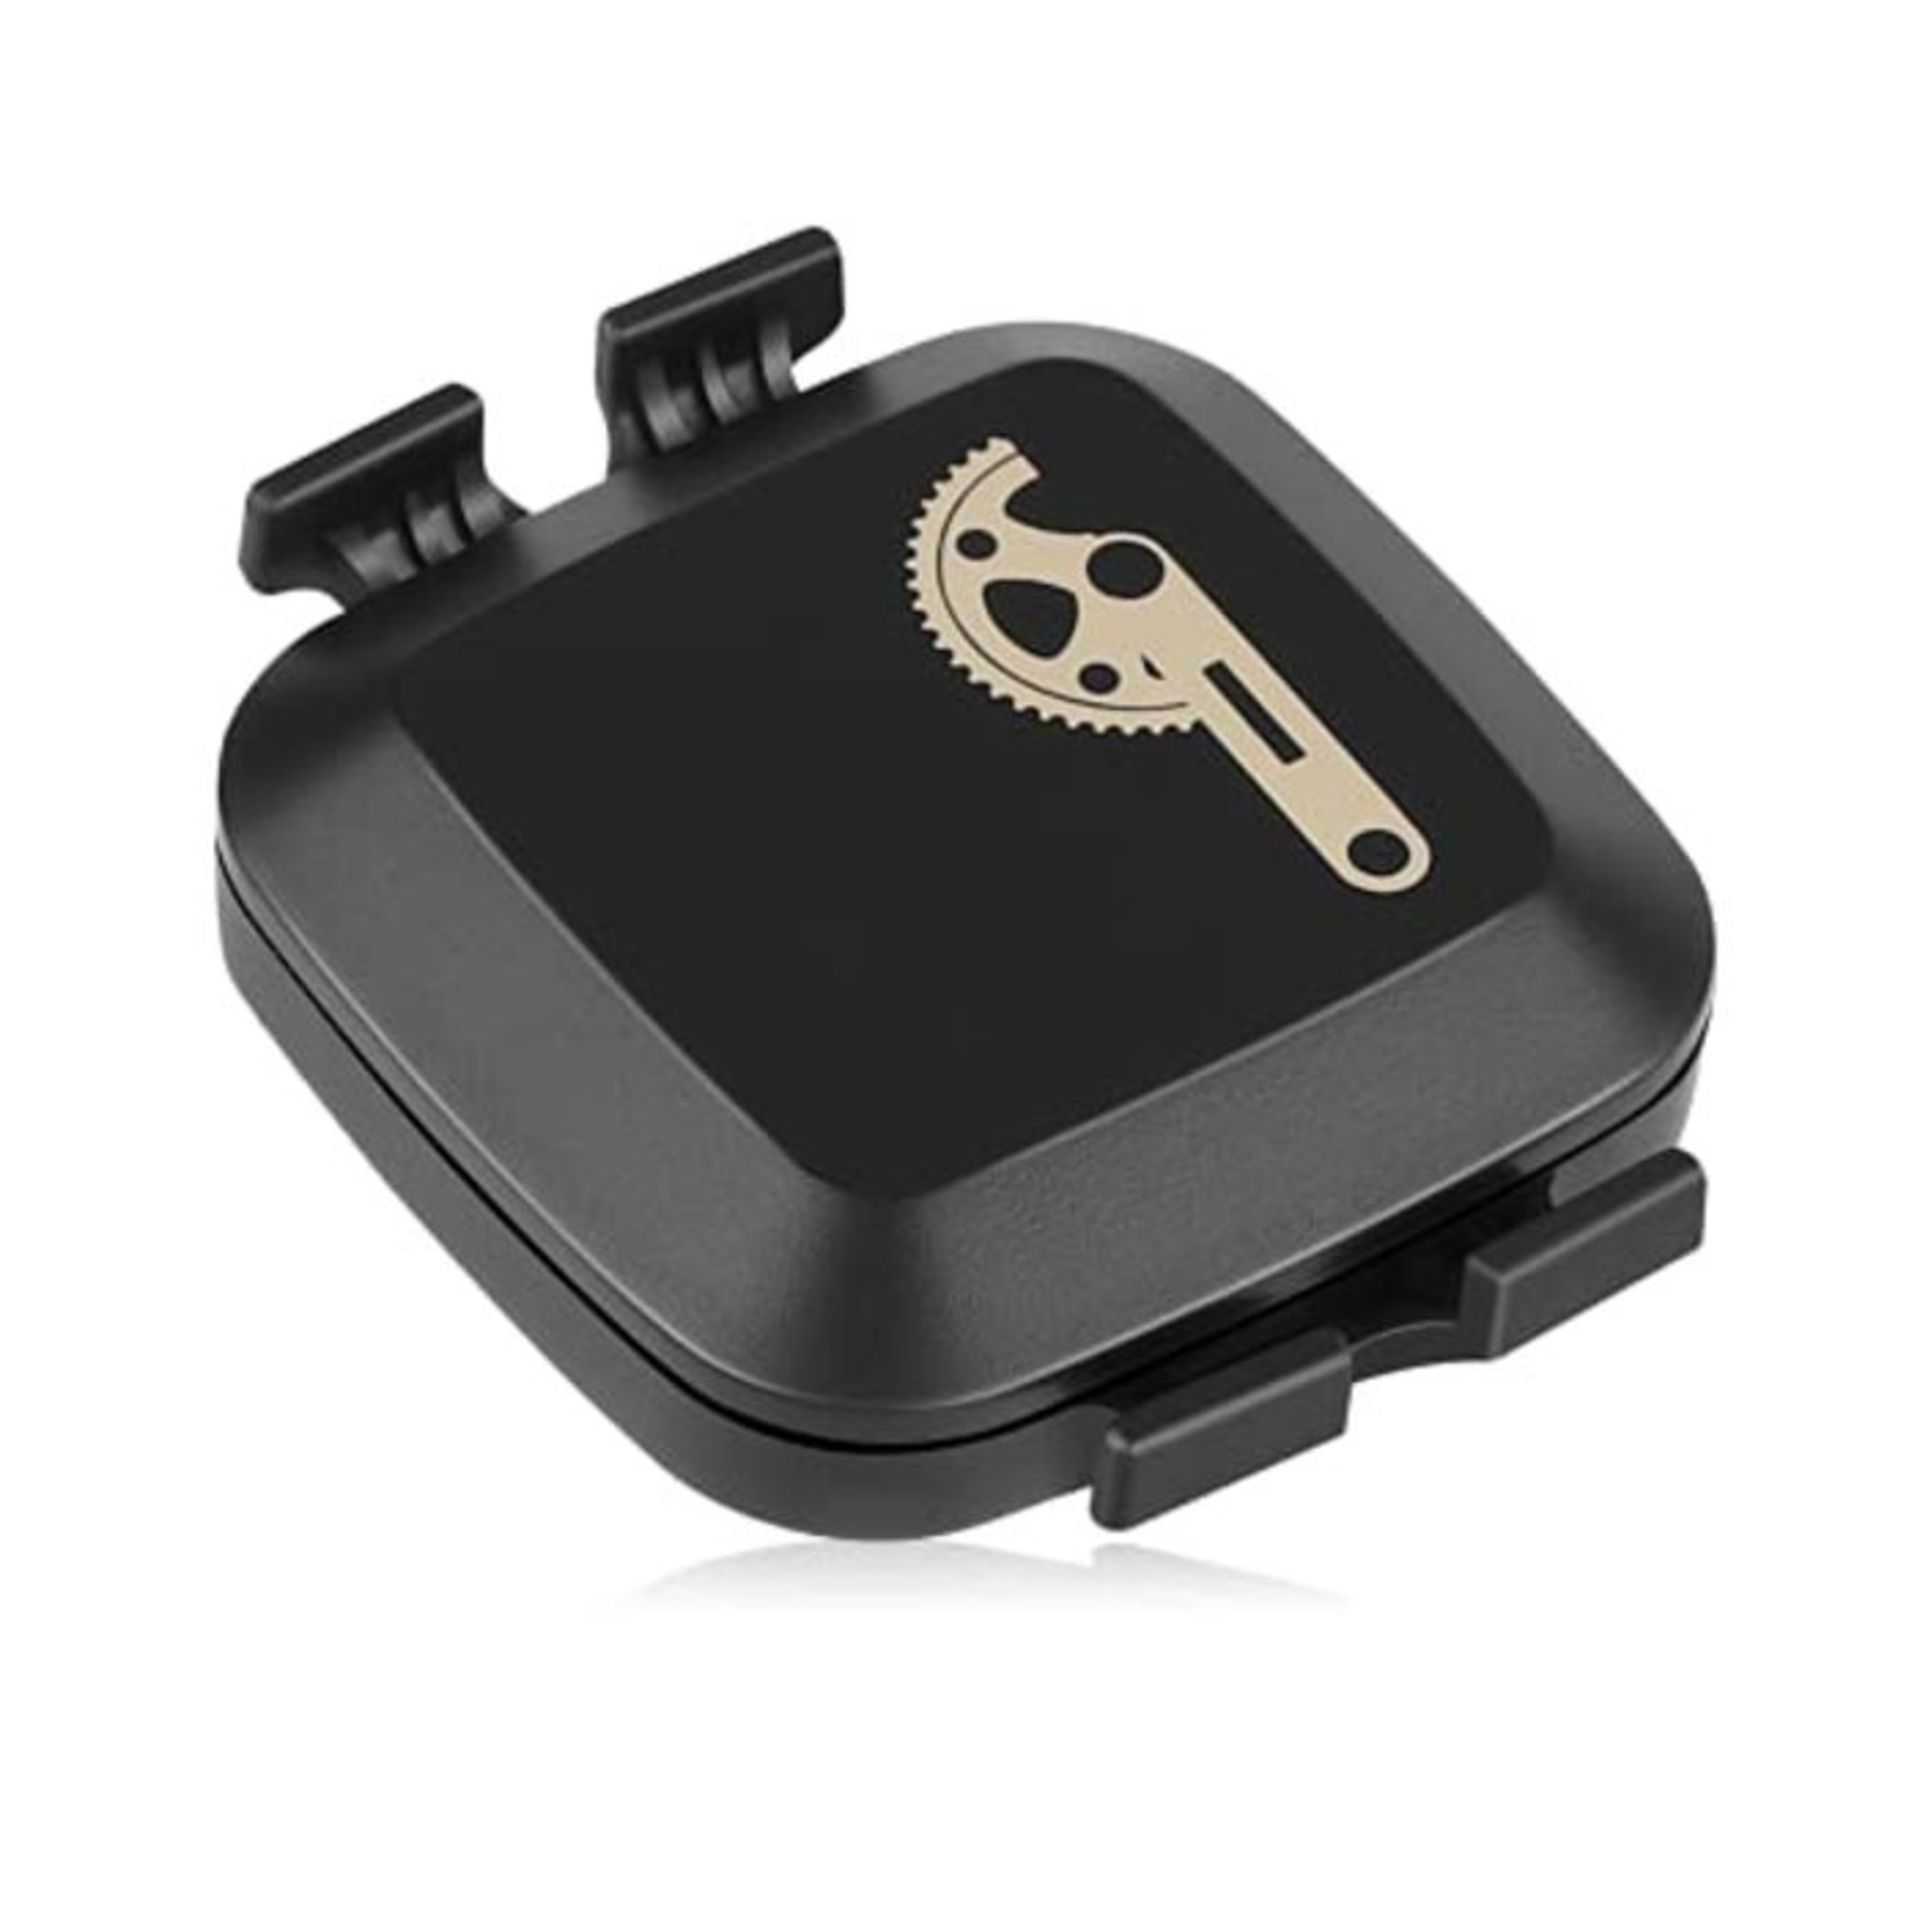 CooSpo Cadence and Speed Sensor Bluetooth ANT+ Cycling RPM Sensor for Bike Compatible